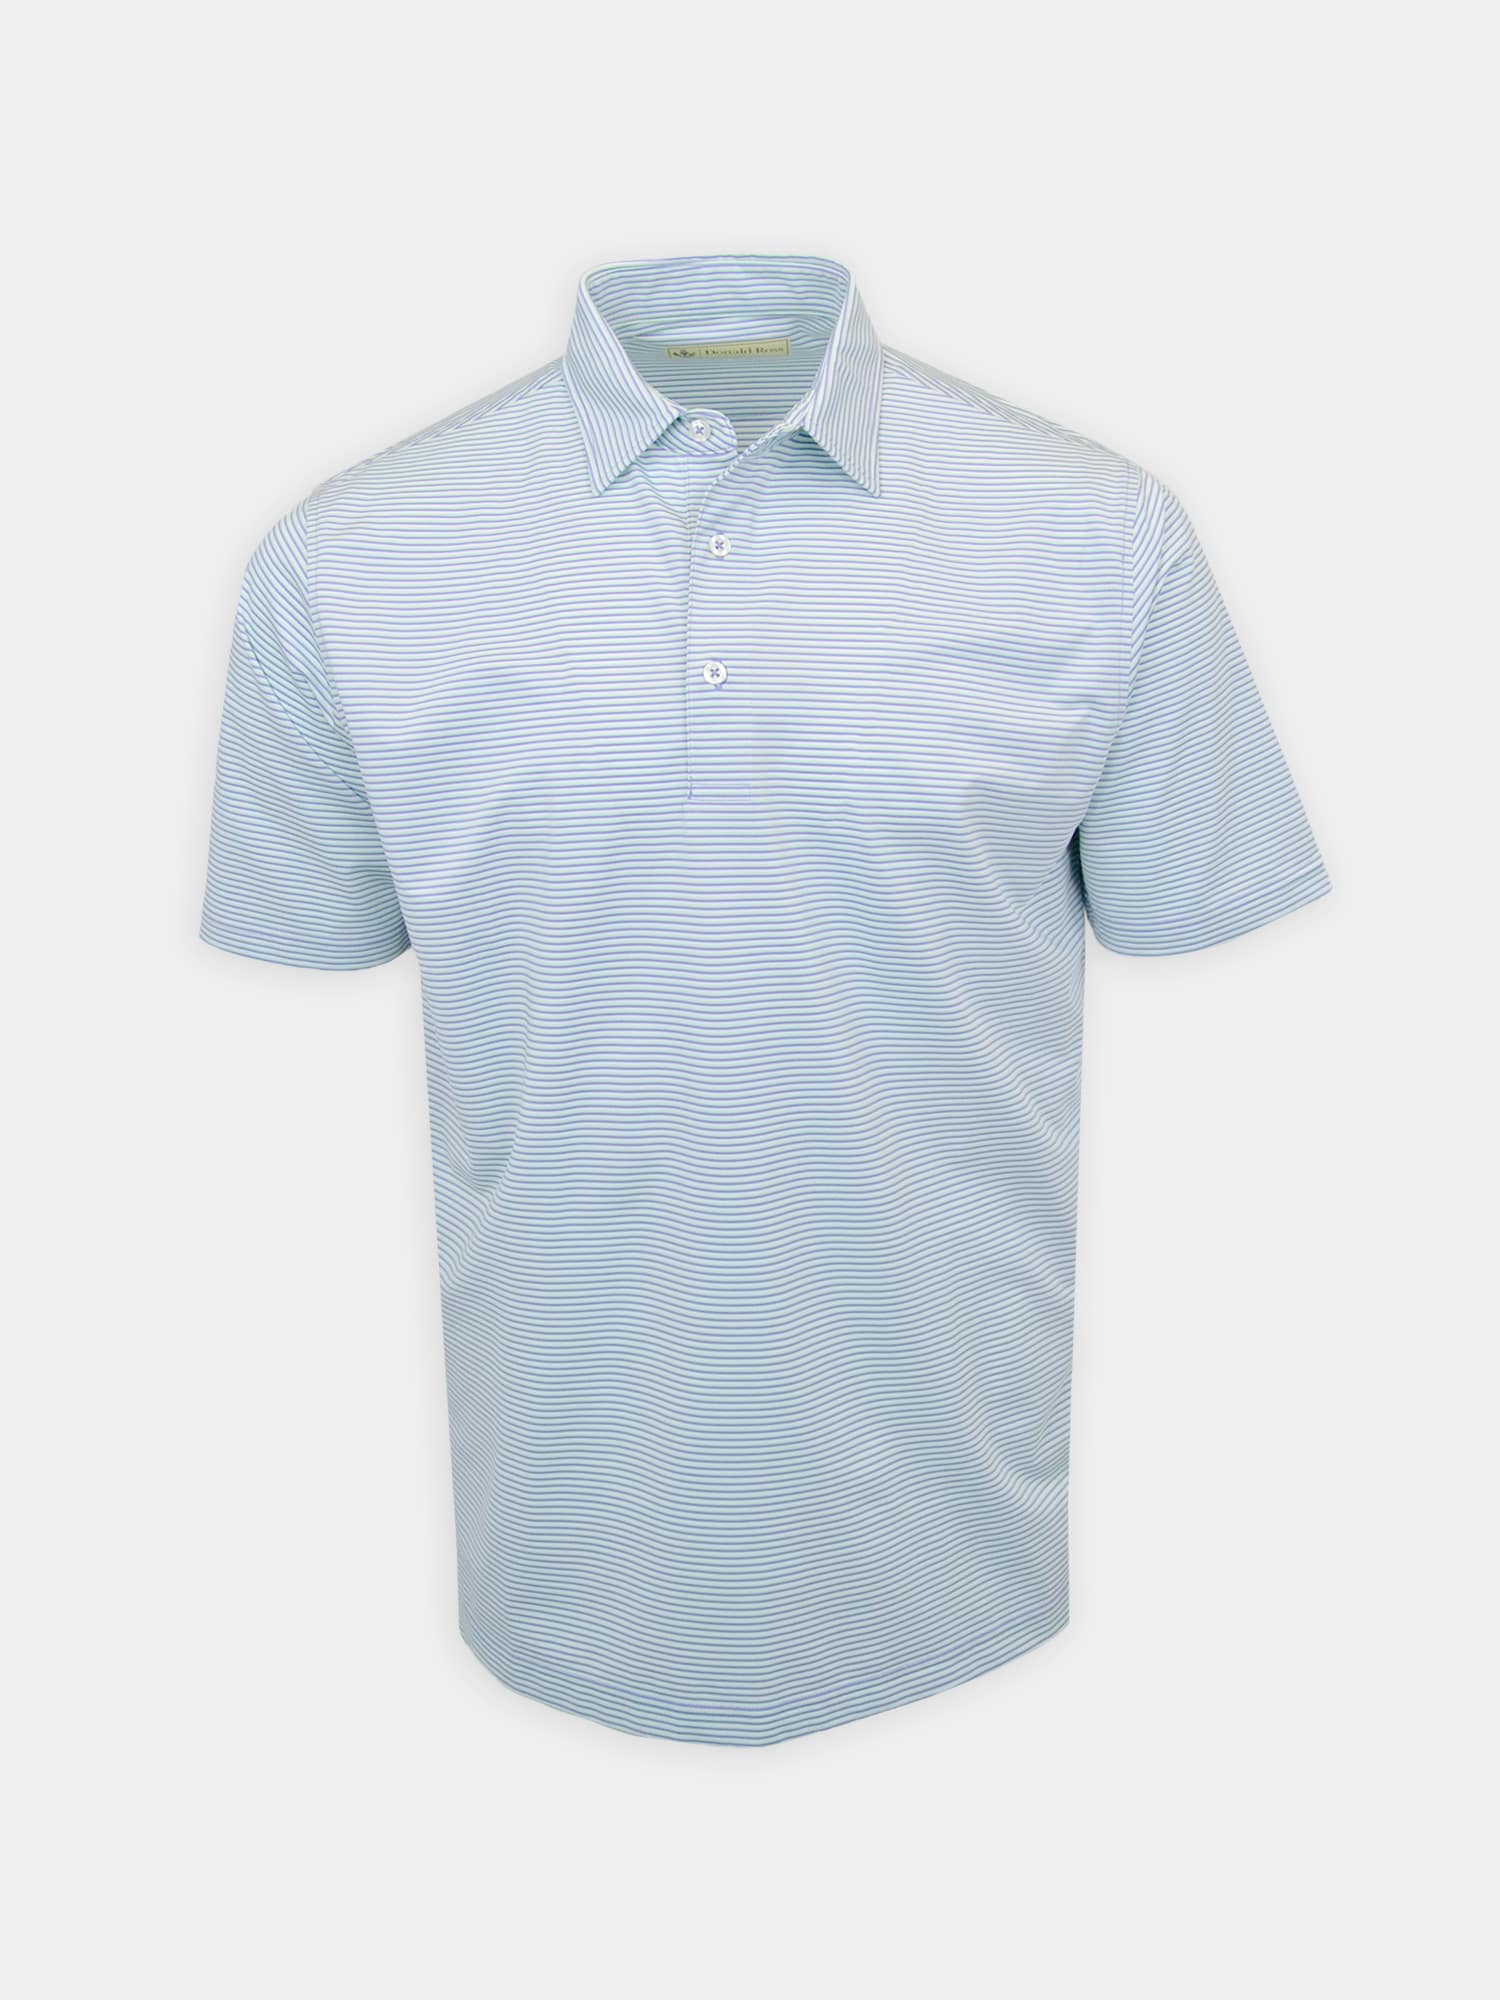 Official Toronto Blue Jays Polos, Blue Jays Golf Shirts, Dress Shirts